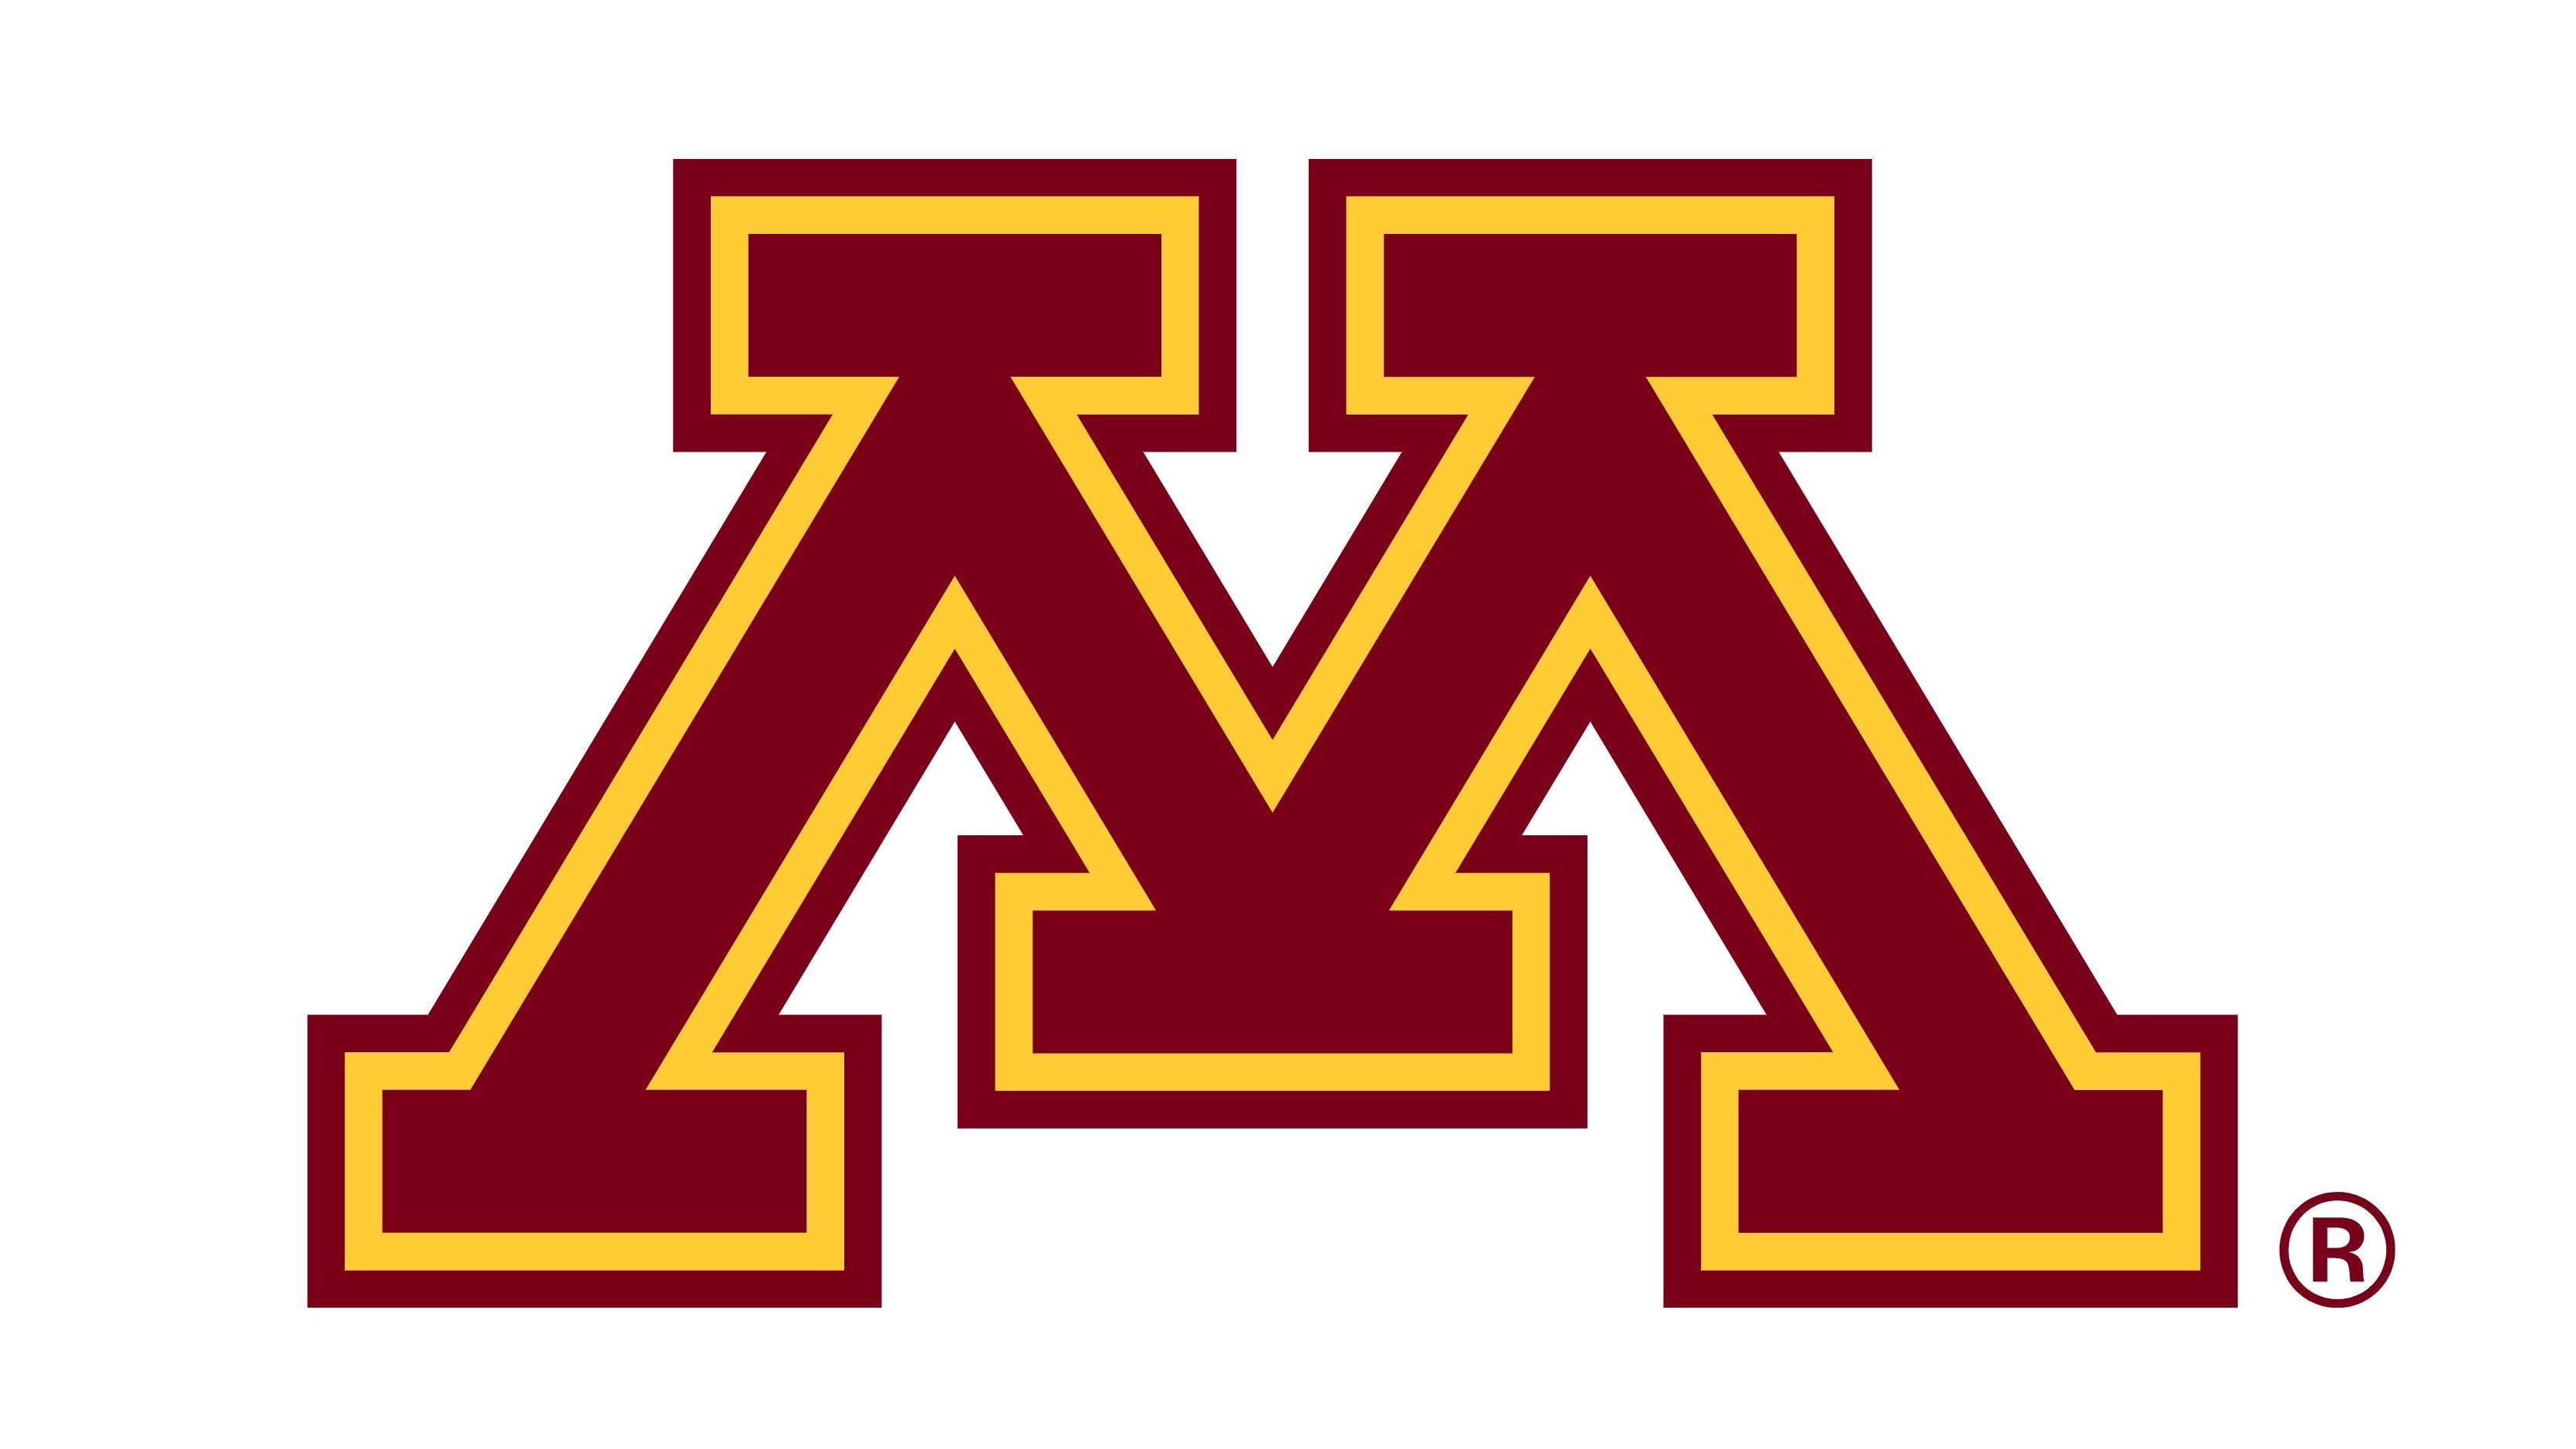 The "Block M" logo of the University of Minnesota Twin Cities